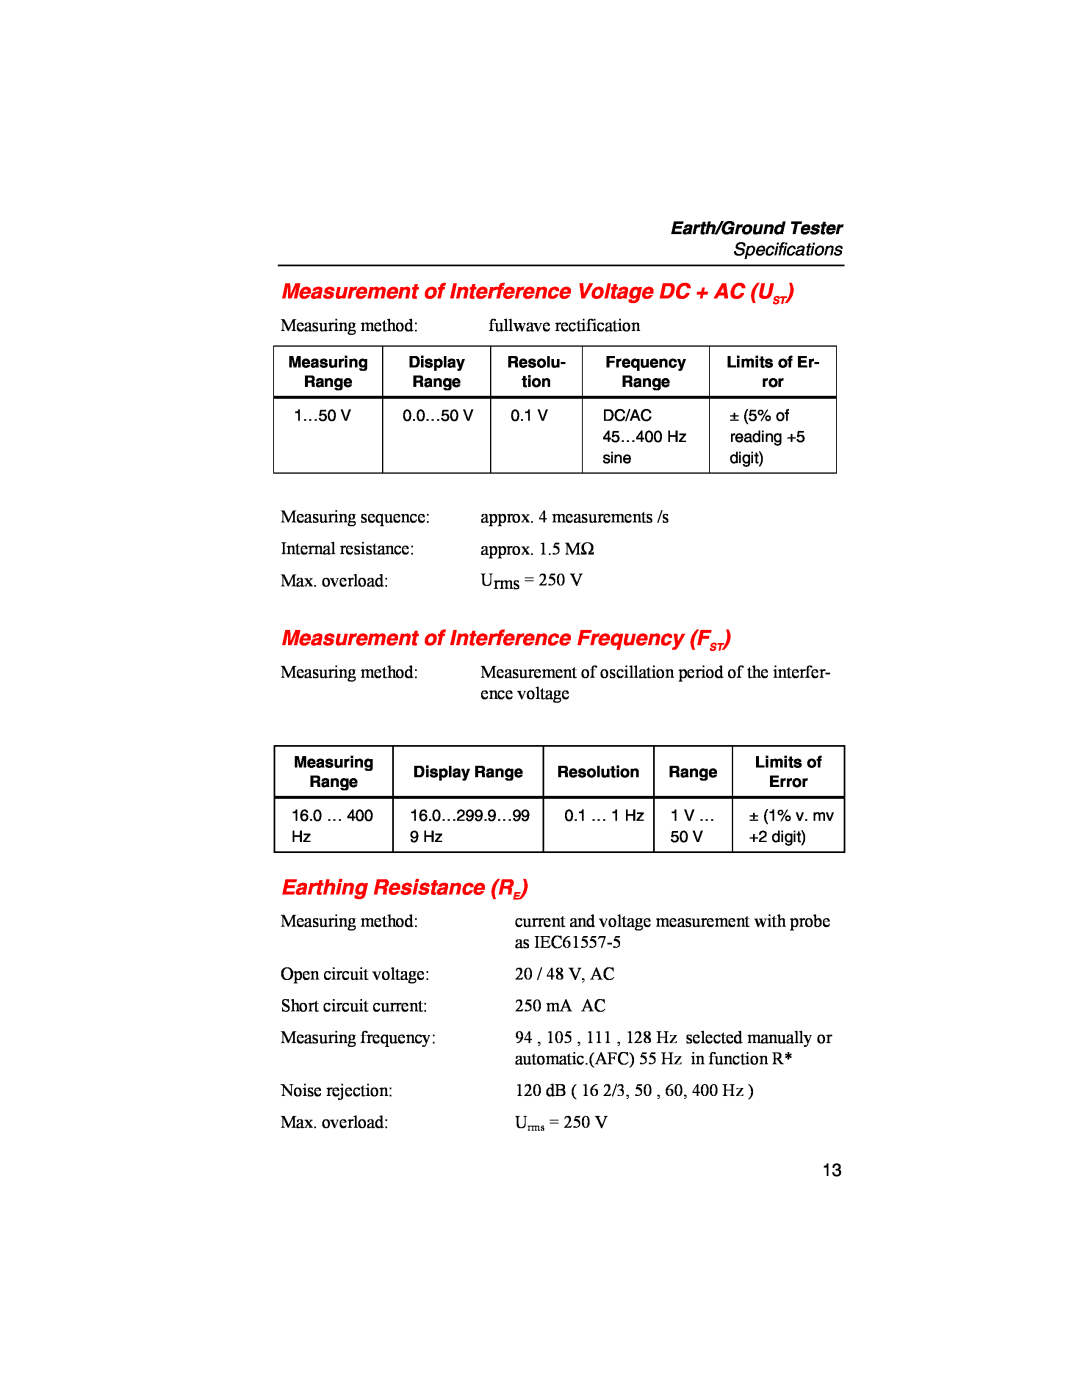 Fluke 1625 Measurement of Interference Voltage DC + AC UST, Measurement of Interference Frequency F ST, Specifications 